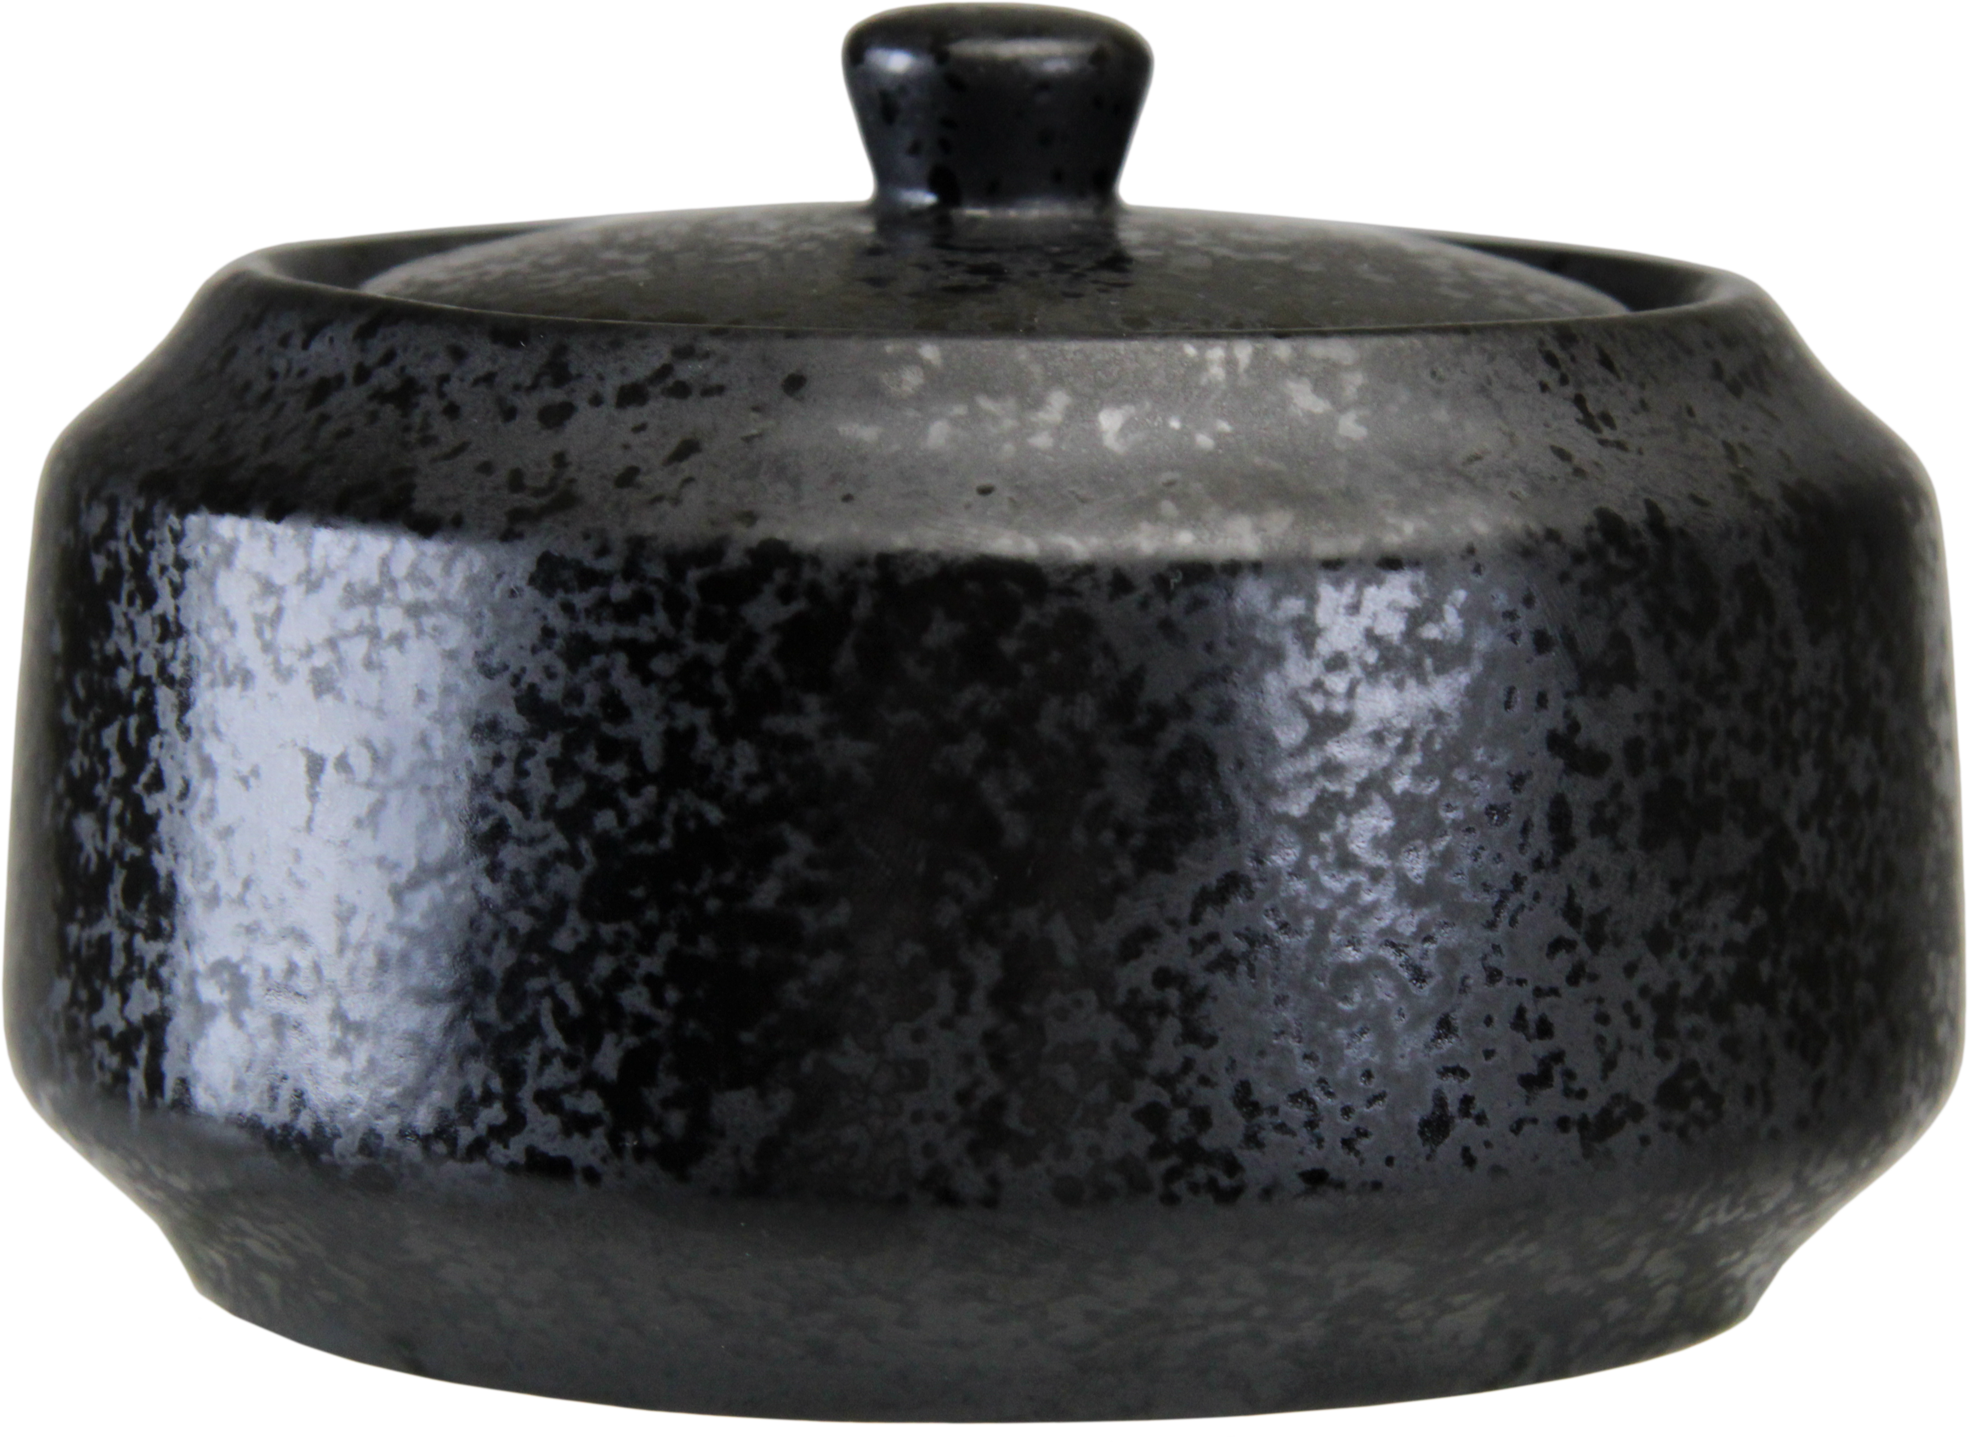 Alloy™ Carbon Black Special Order Sugar Bowl